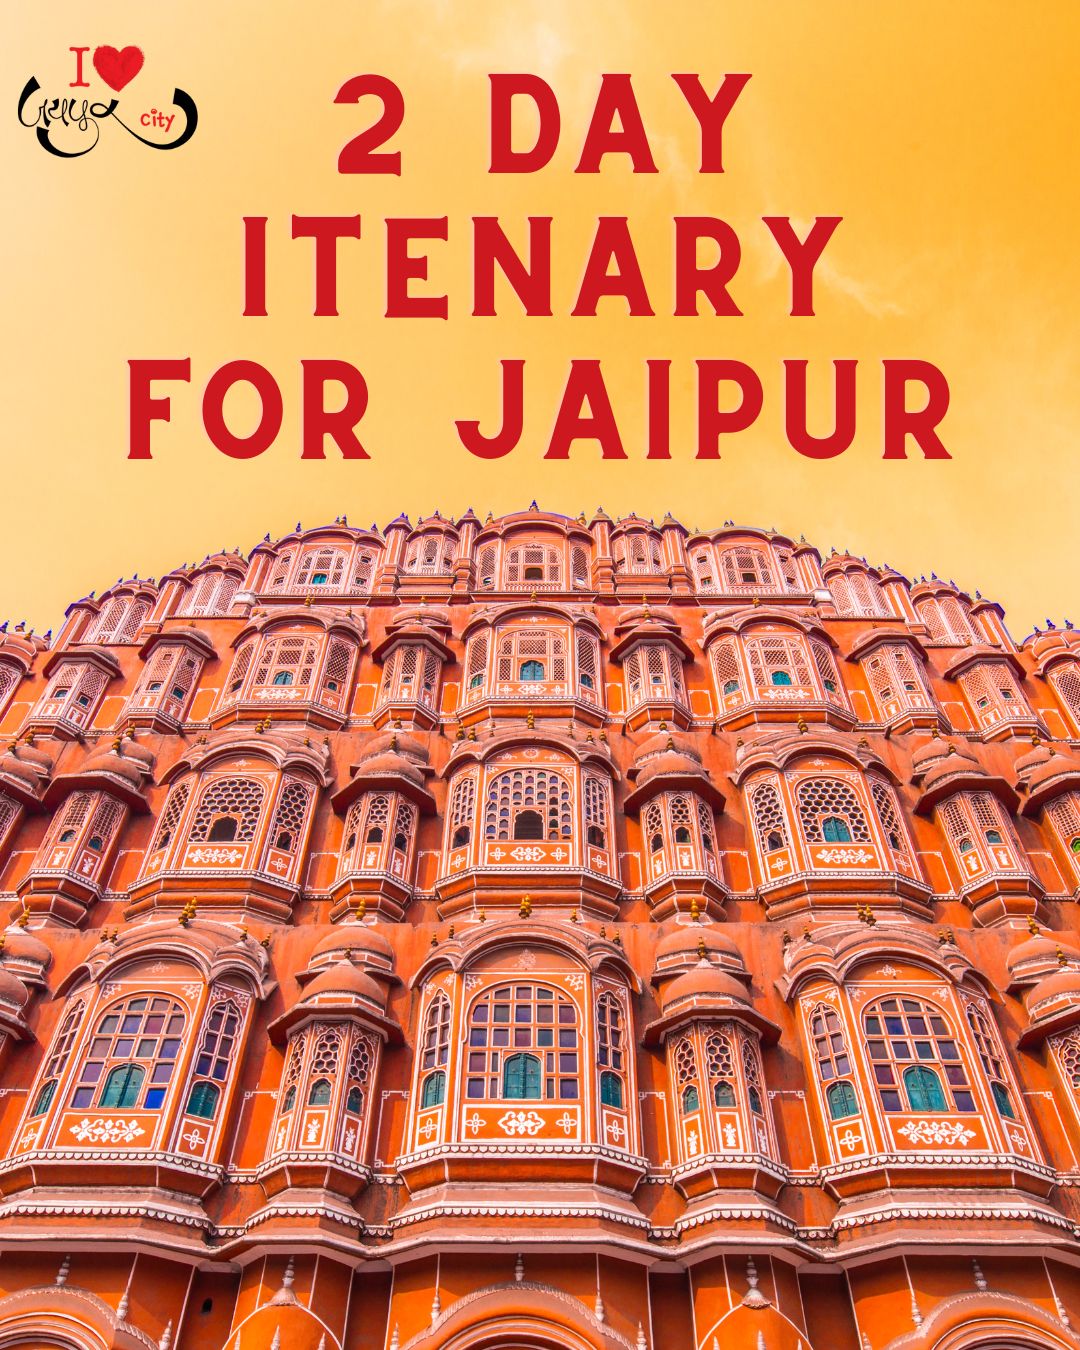 2 day itenary for jaipur